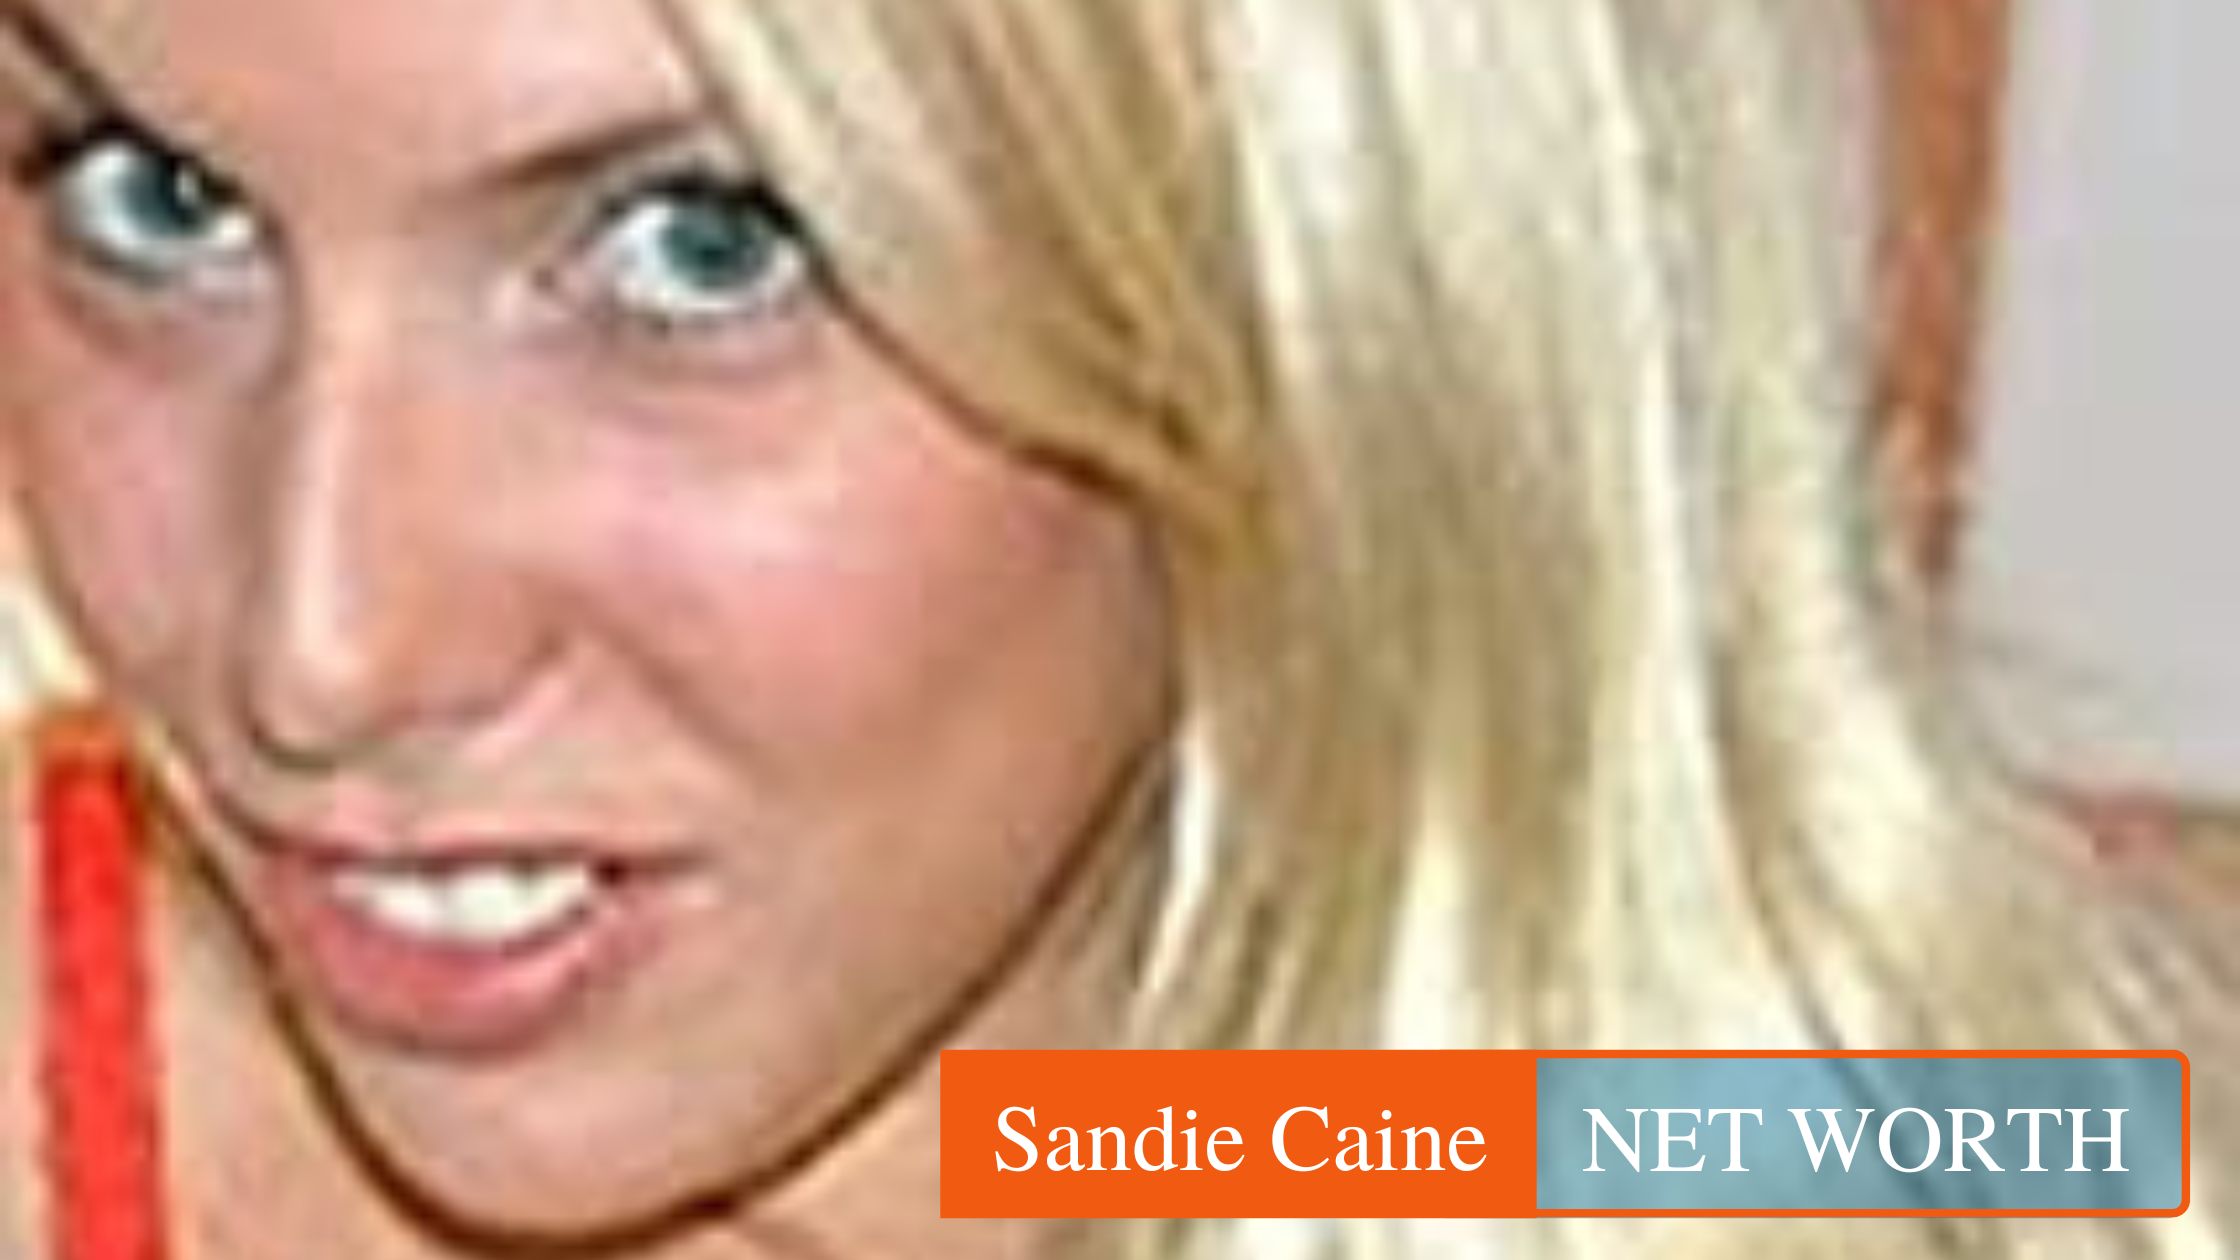 Sandie Caine